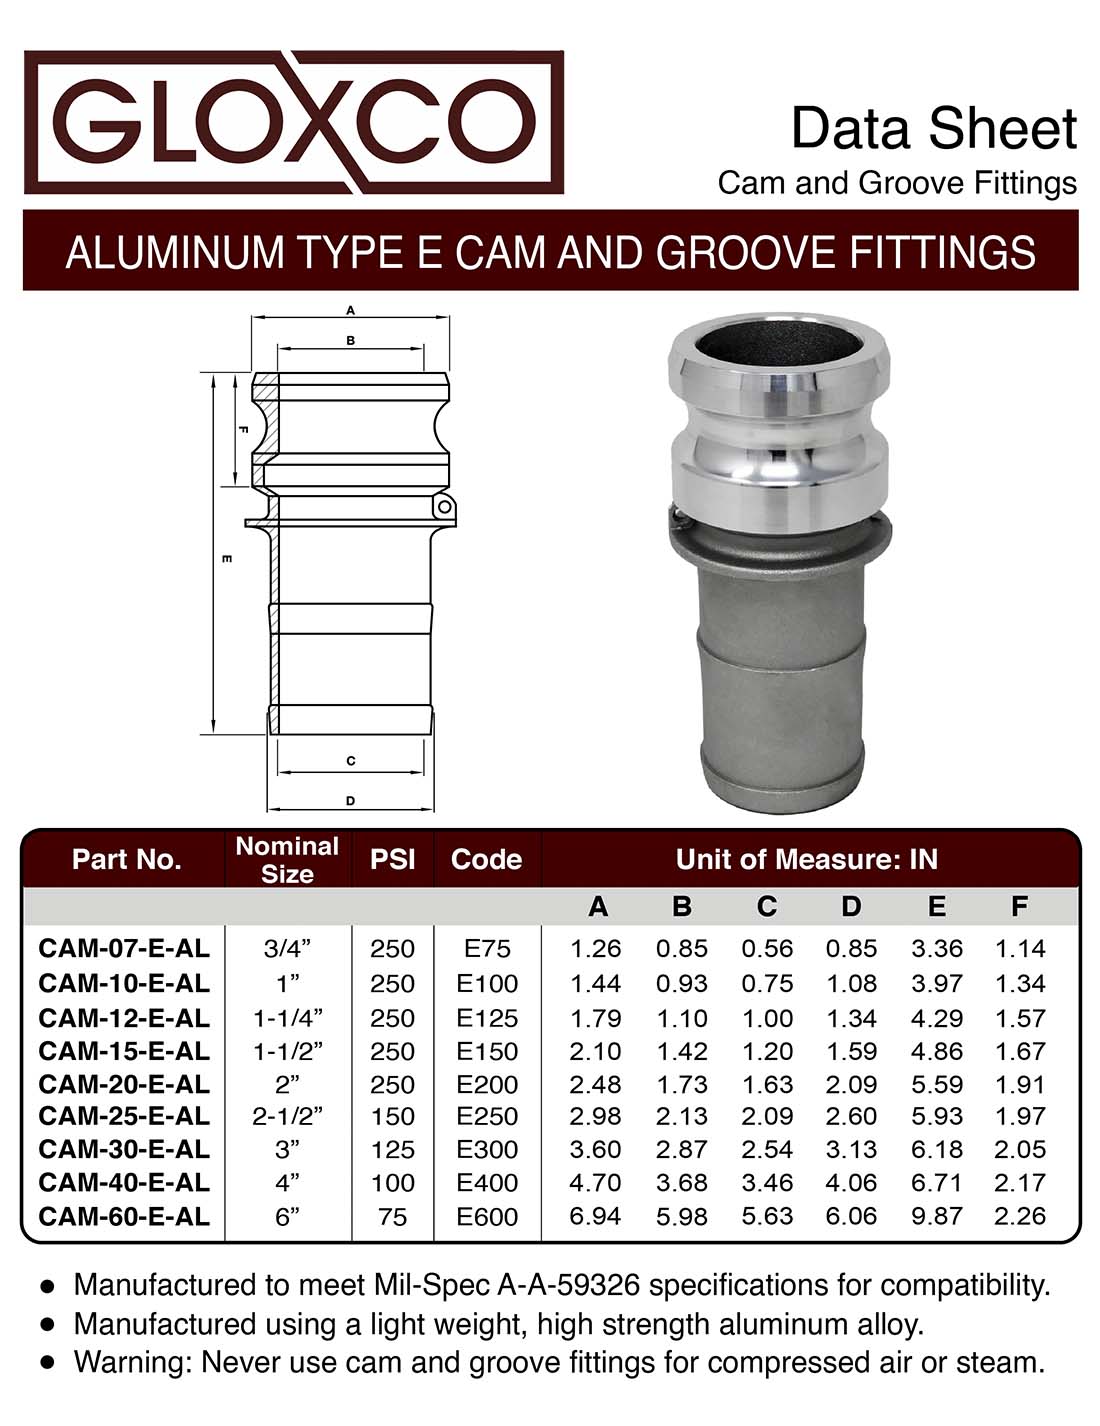 300-E-AL Aluminum Cam And Groove Fitting 3” Male Cam Lock X 3” Hose Shank 